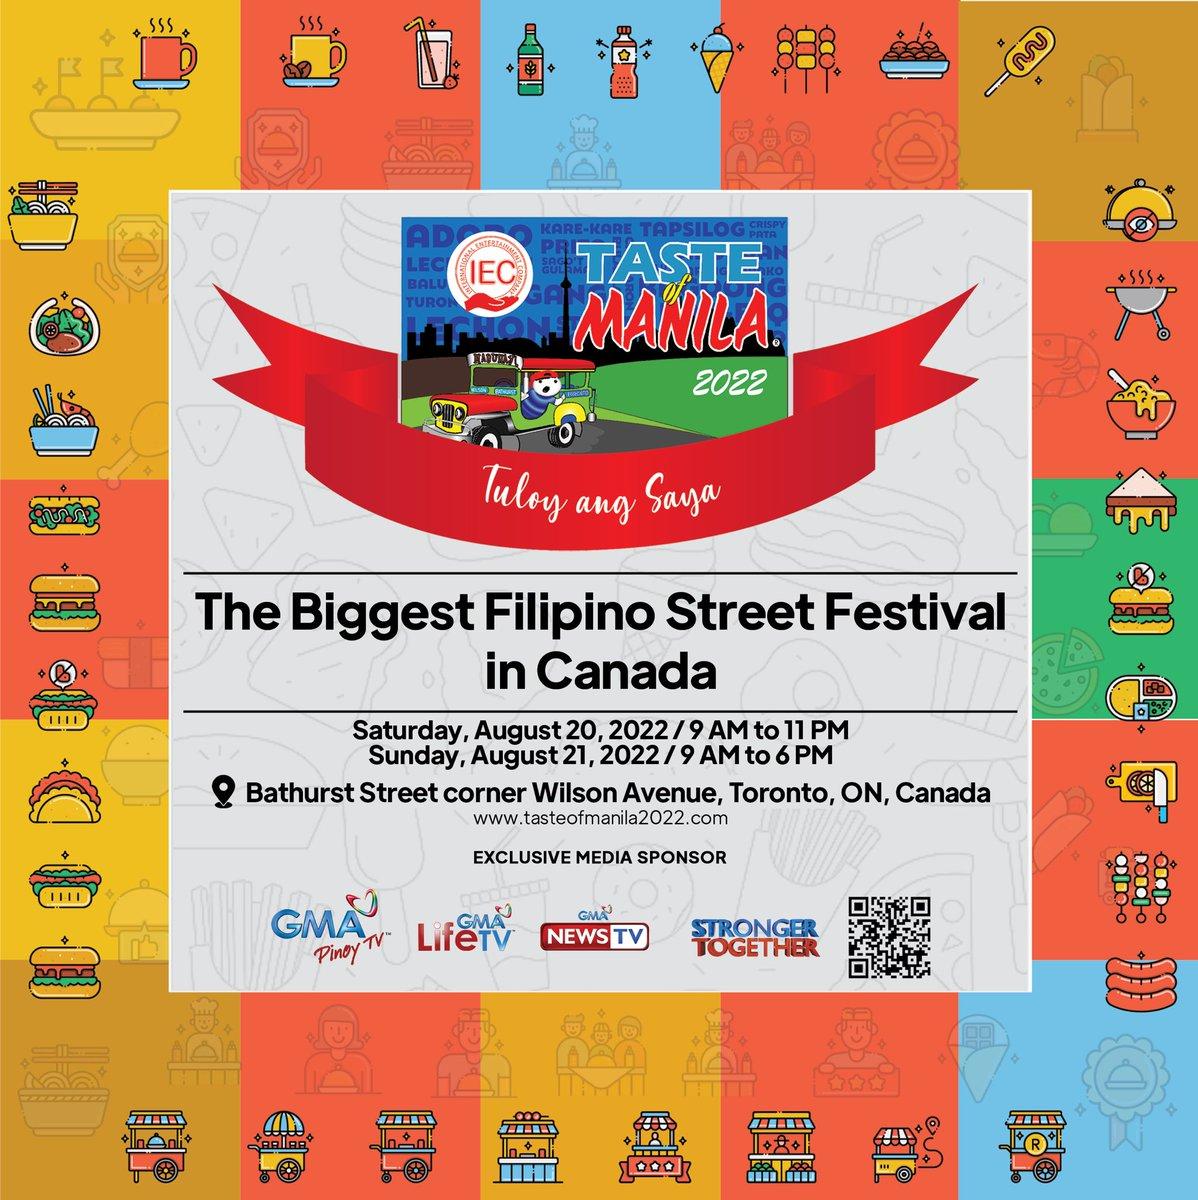 Refresh your Filipino tastebuds with 'Taste of Manila 2022' in Toronto